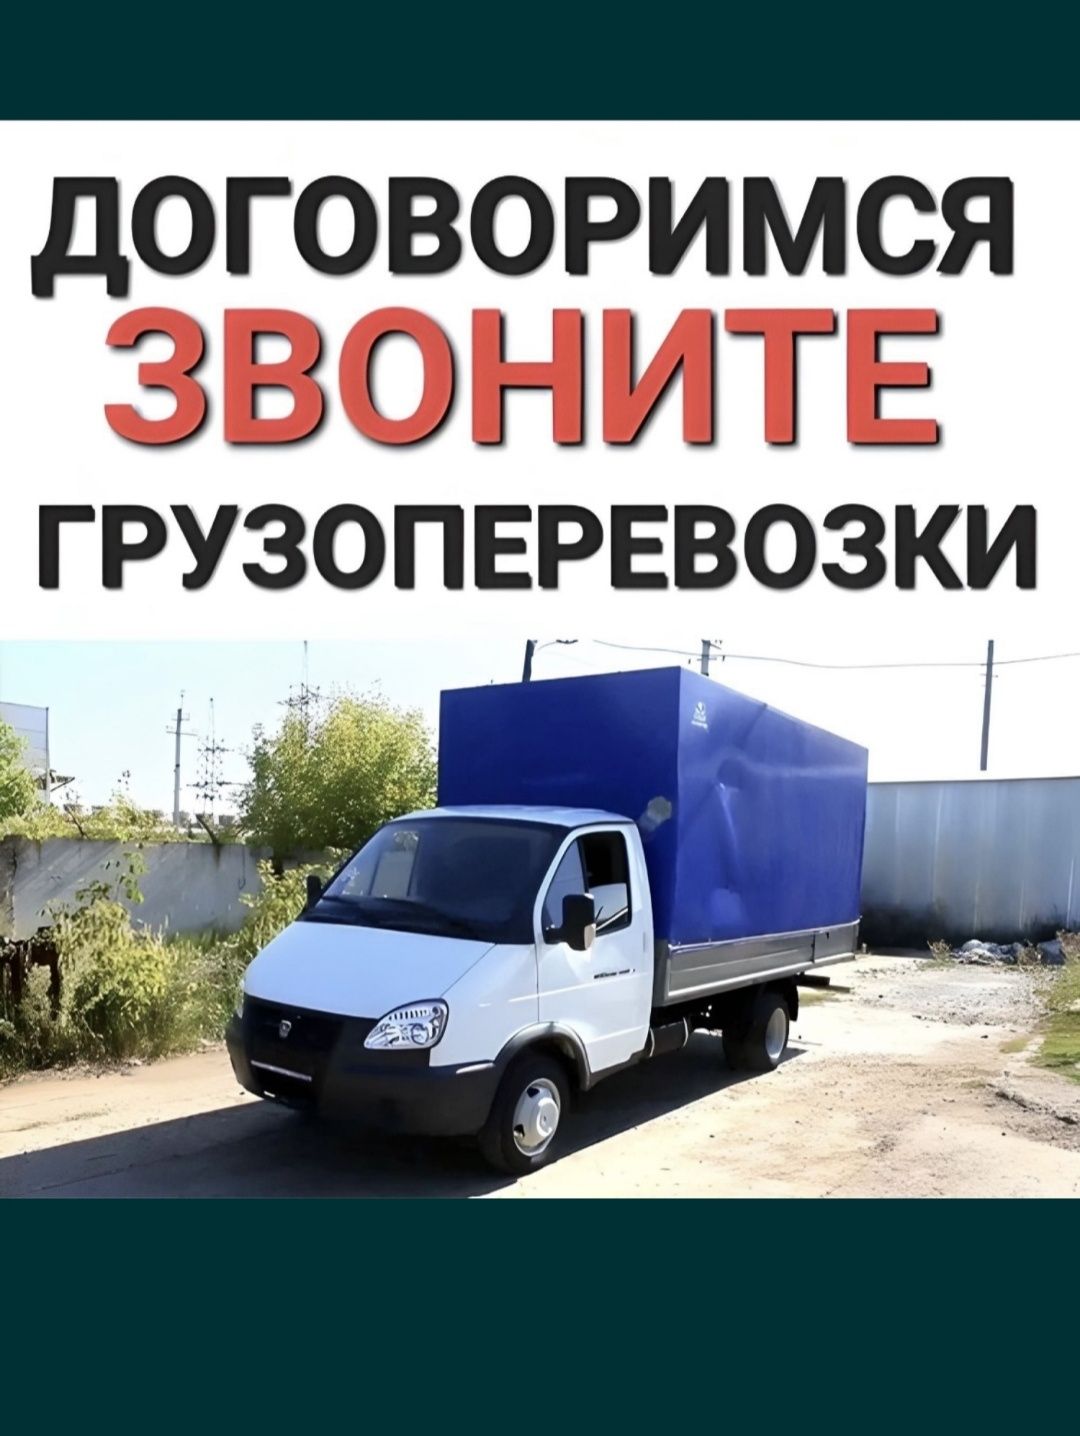 Перевозка доставка грузов город межгород